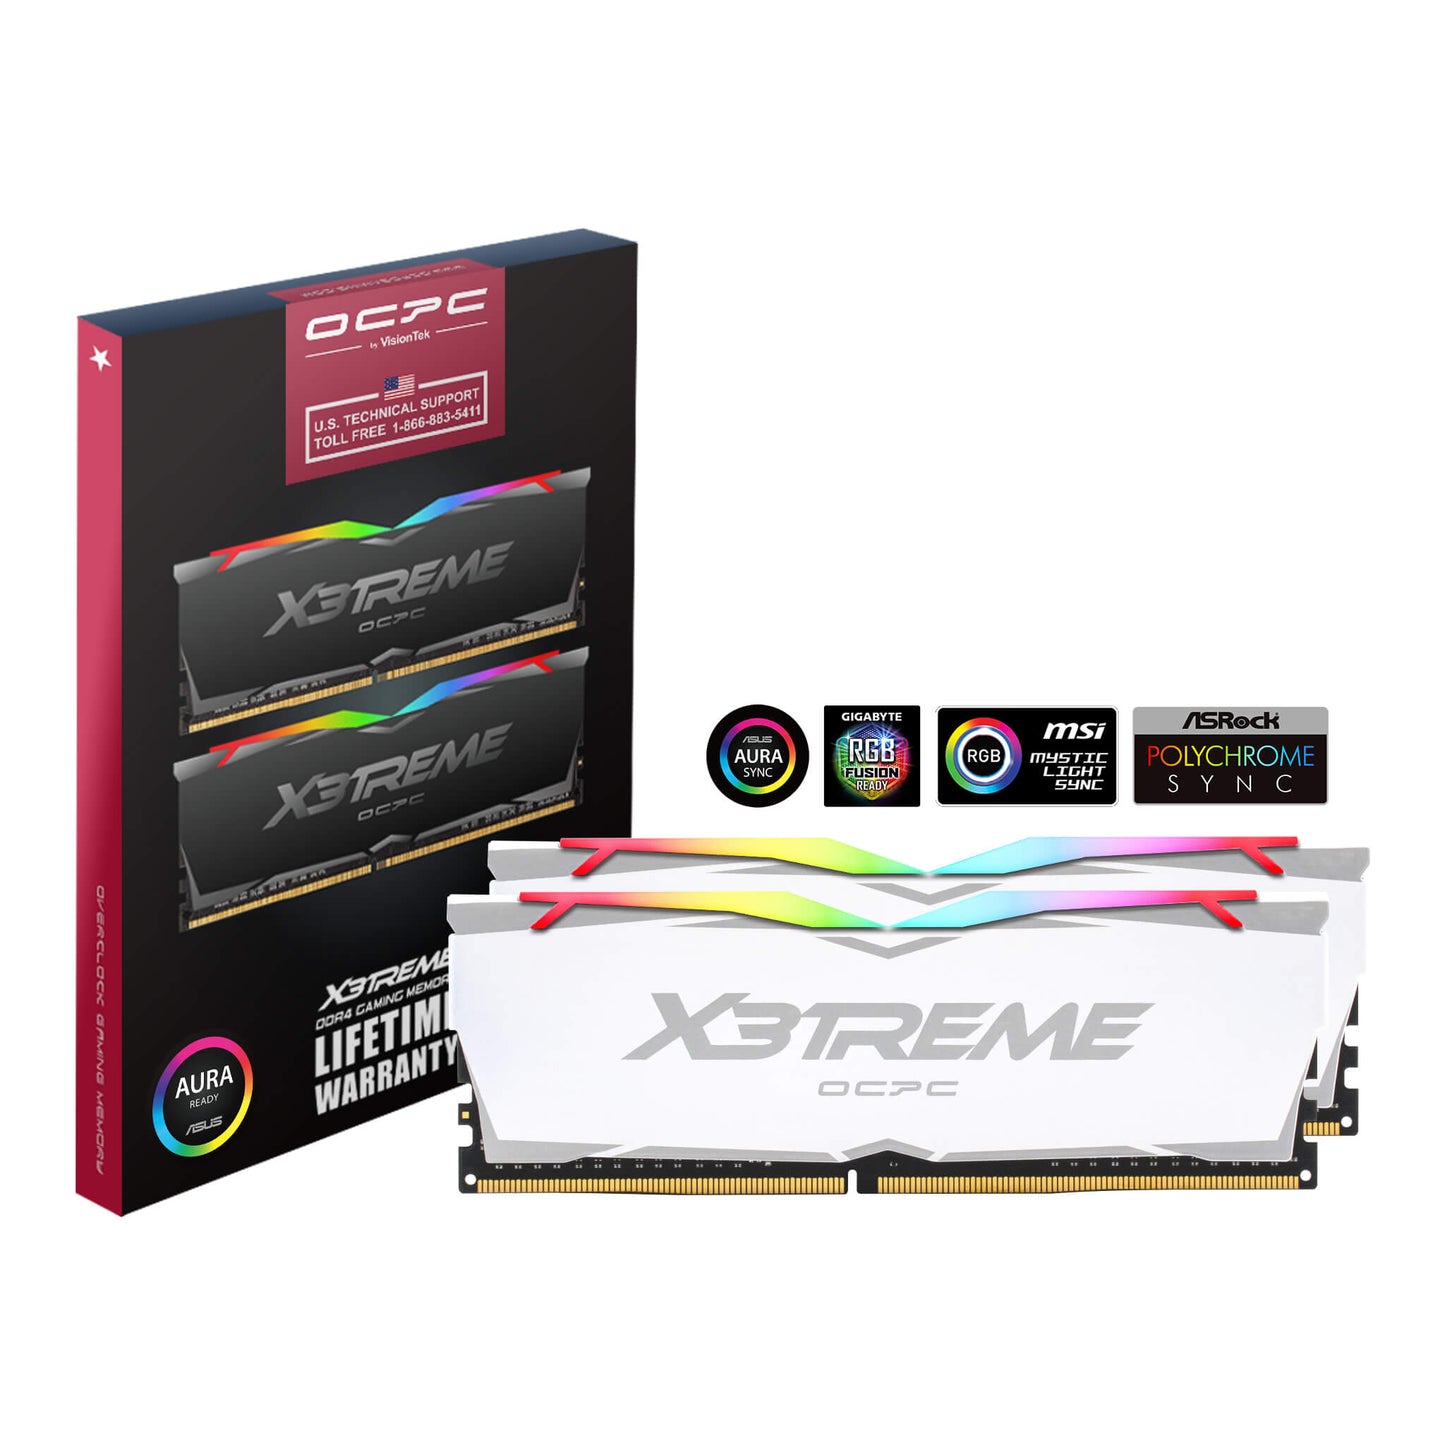 OCPC X3Treme Aura RGB DDR4 16GB (2x8GB) - 3000MHz - CL16 - White